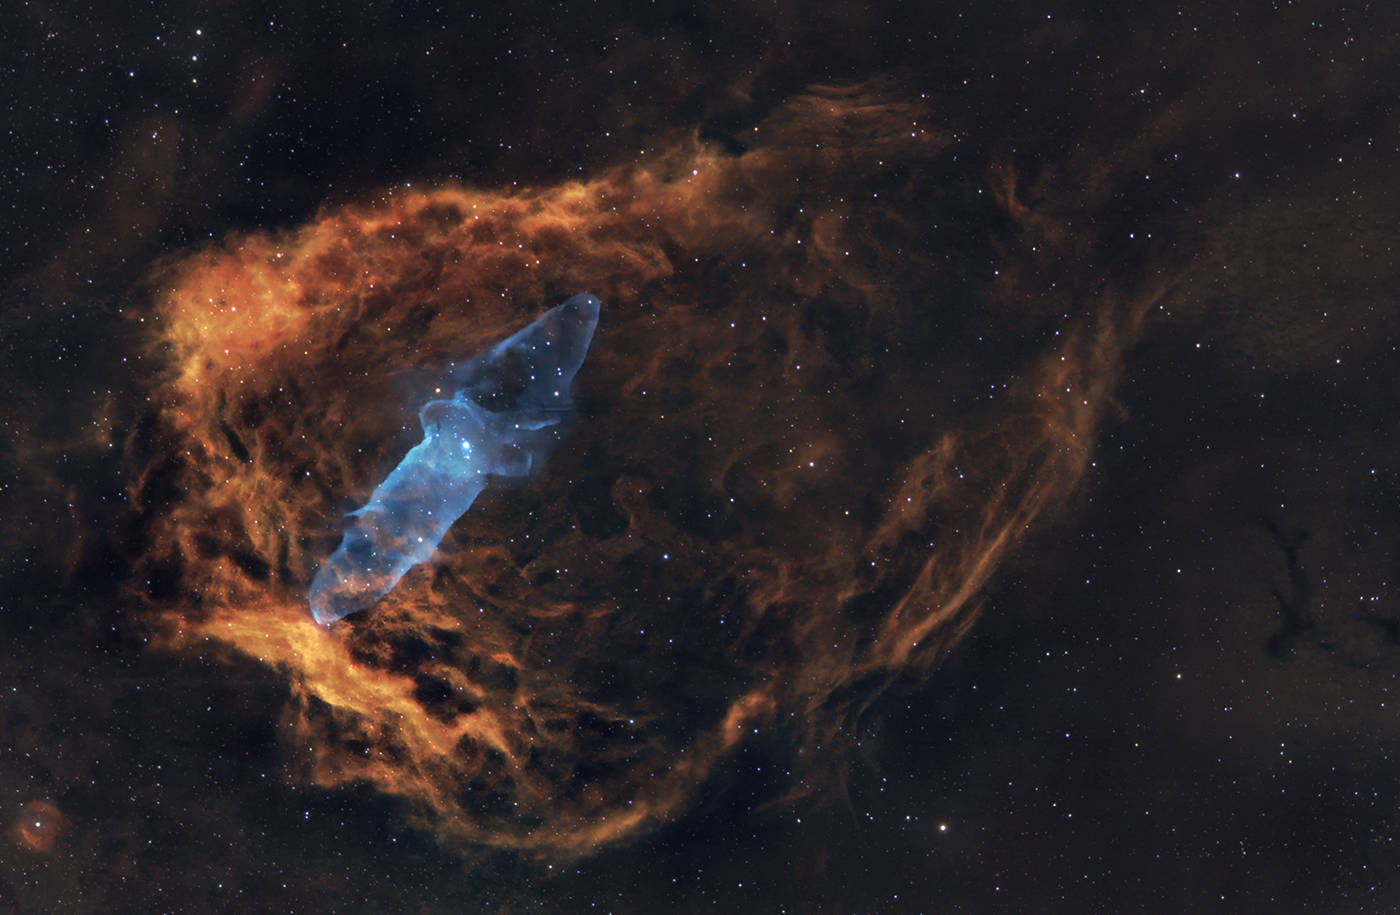 The Flying Bat & Giant Squid Nebula - SH2-129 & Ou4